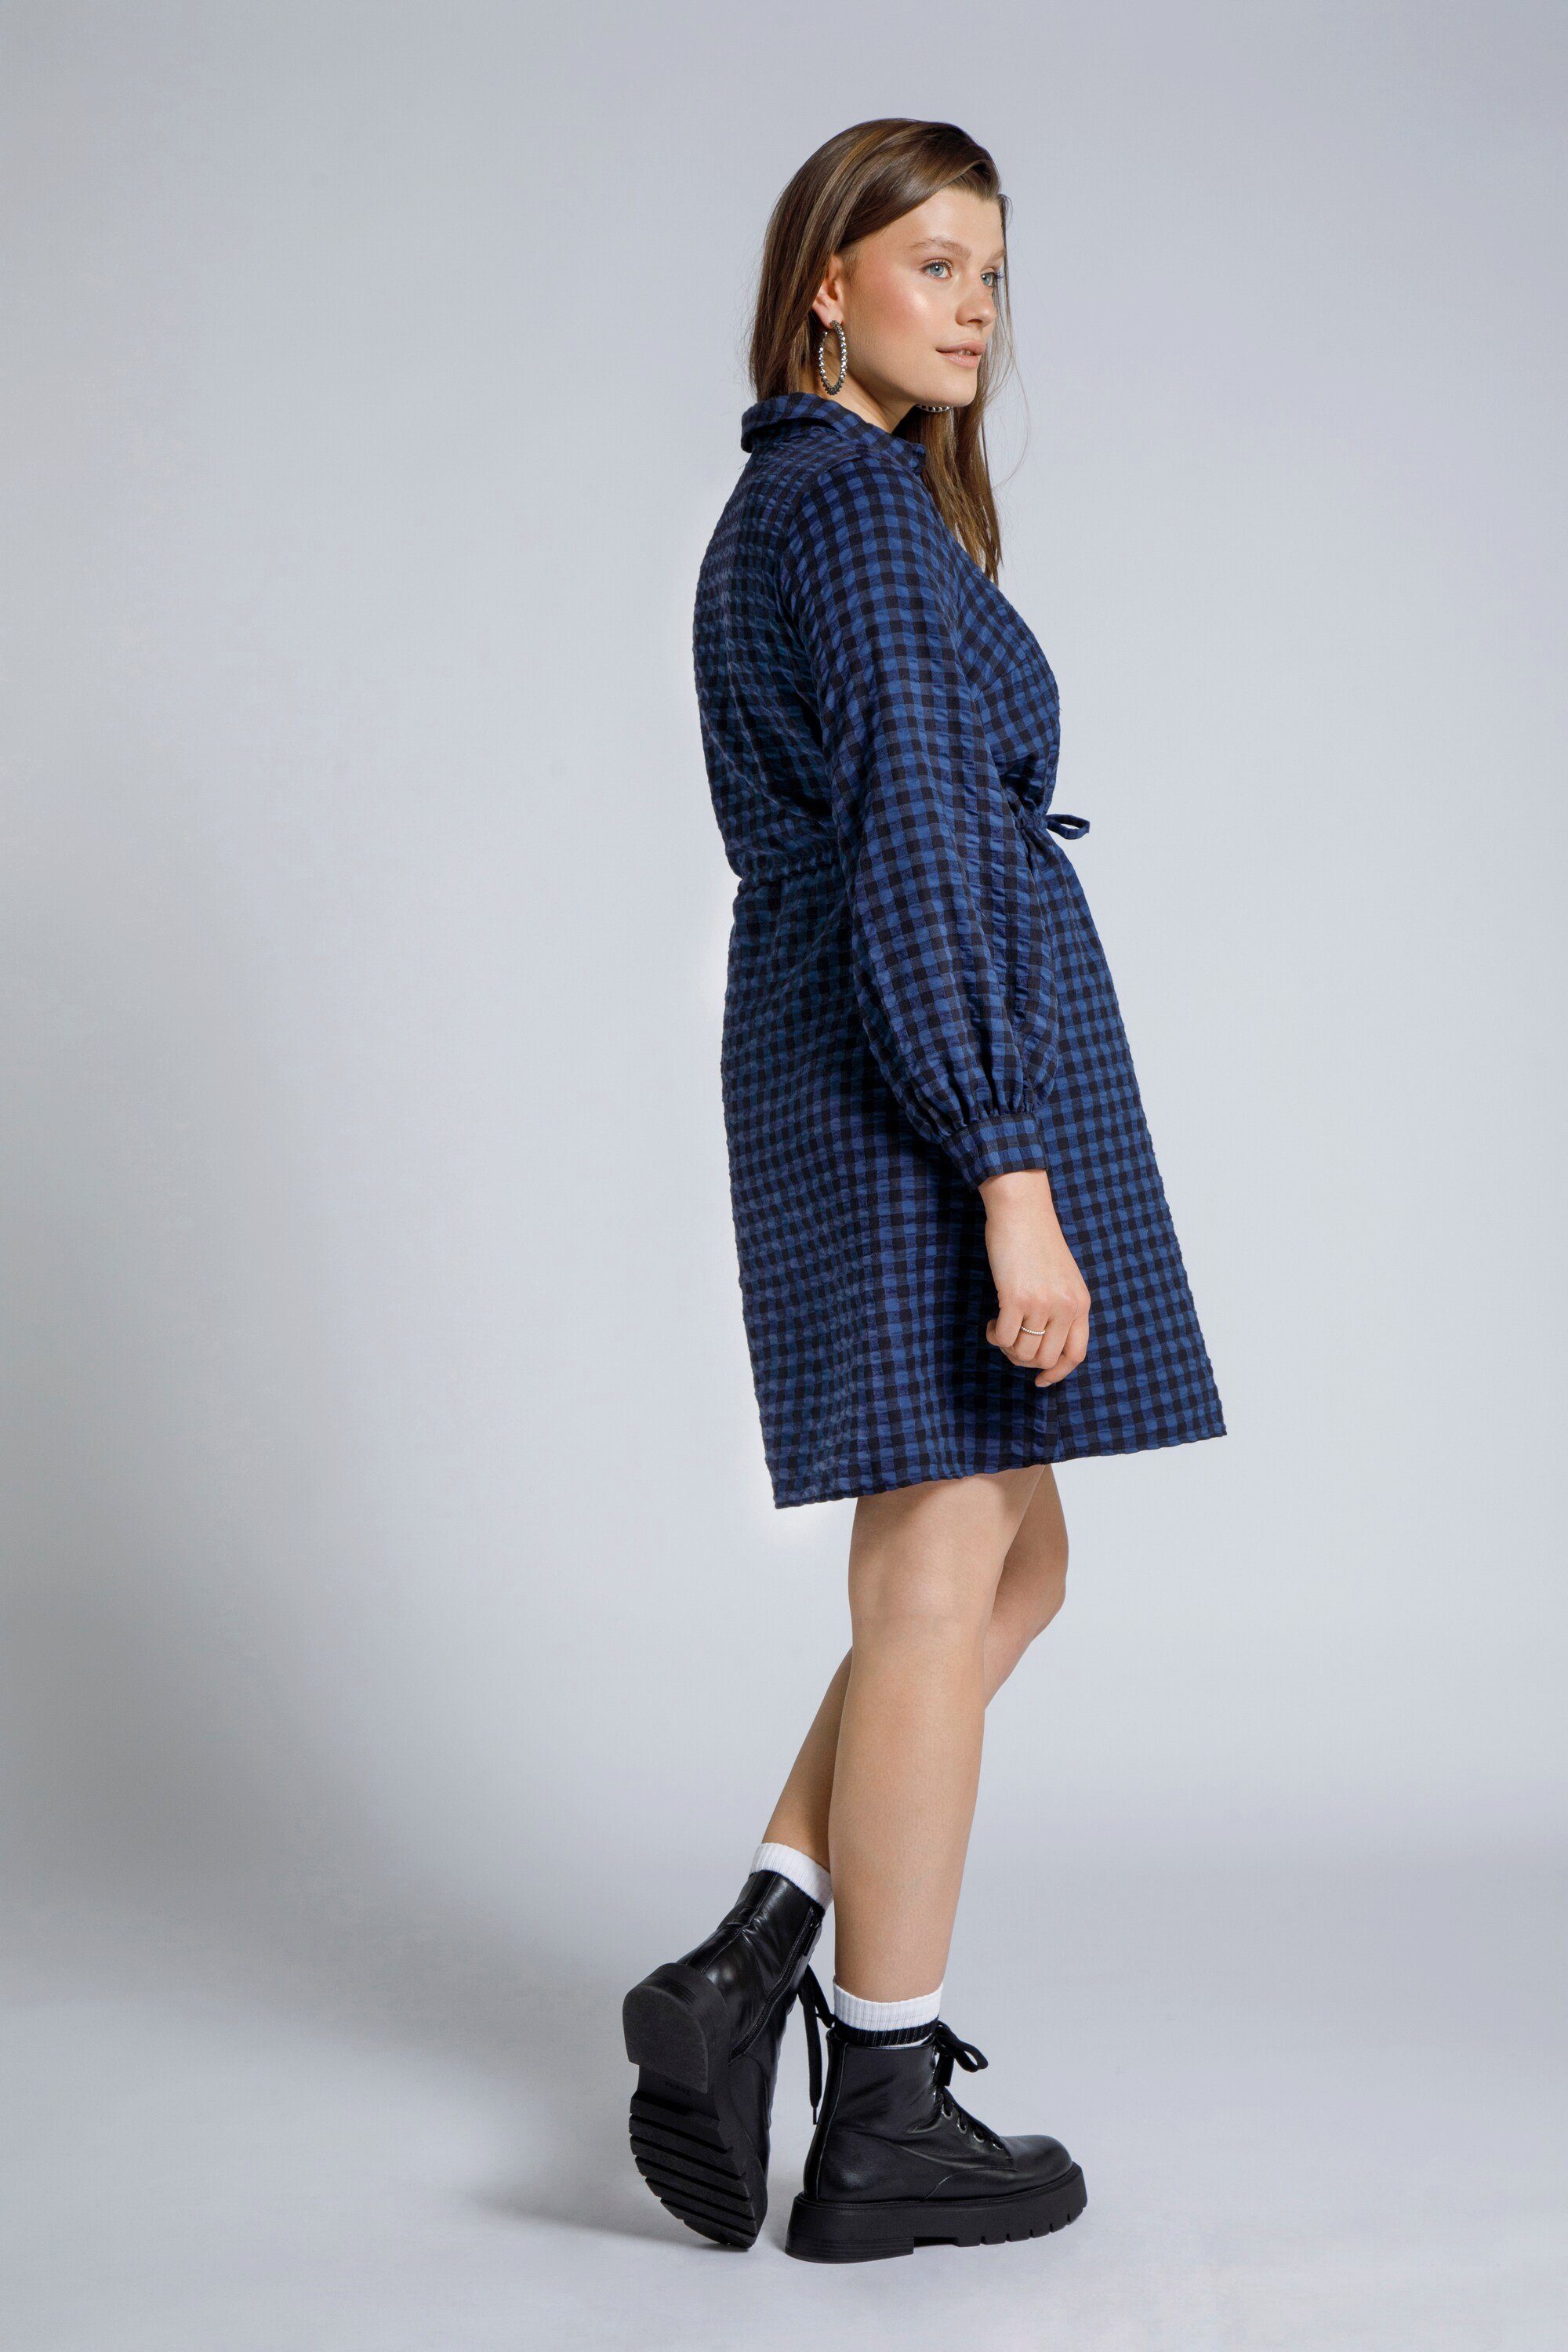 Damen Kleider Studio Untold Jeanskleid Mini Kleid A-Line Hemdkragen Langarm Karo Muster